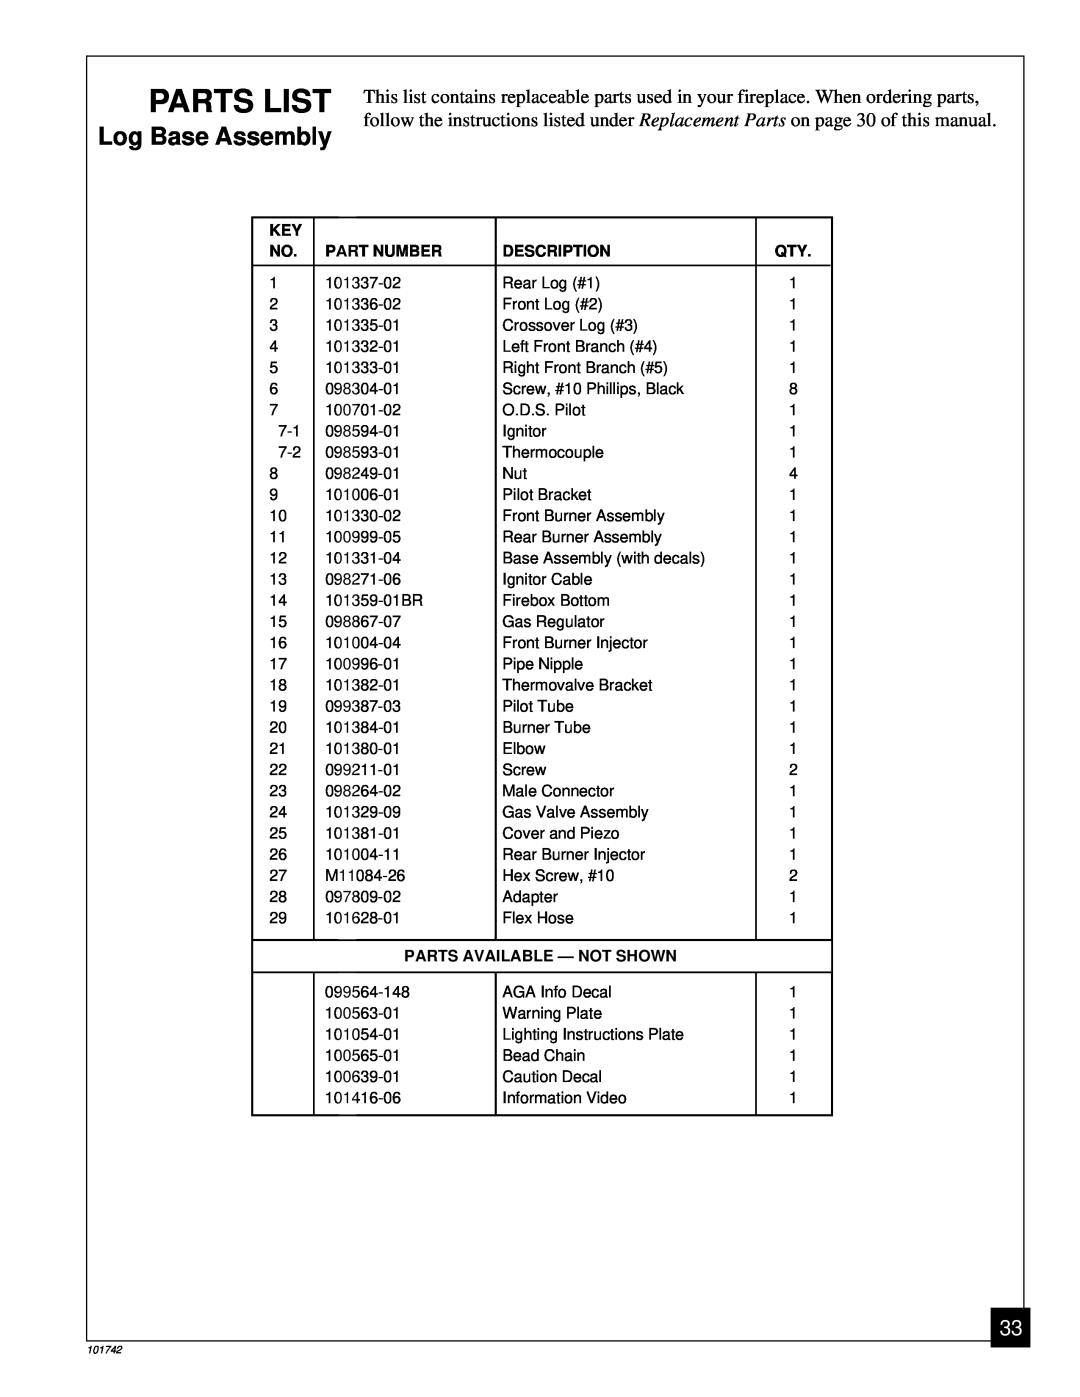 Desa UNVENTED (VENT-FREE) NATURAL GAS FIREPLACE installation manual Parts List, Log Base Assembly, Part Number, Description 